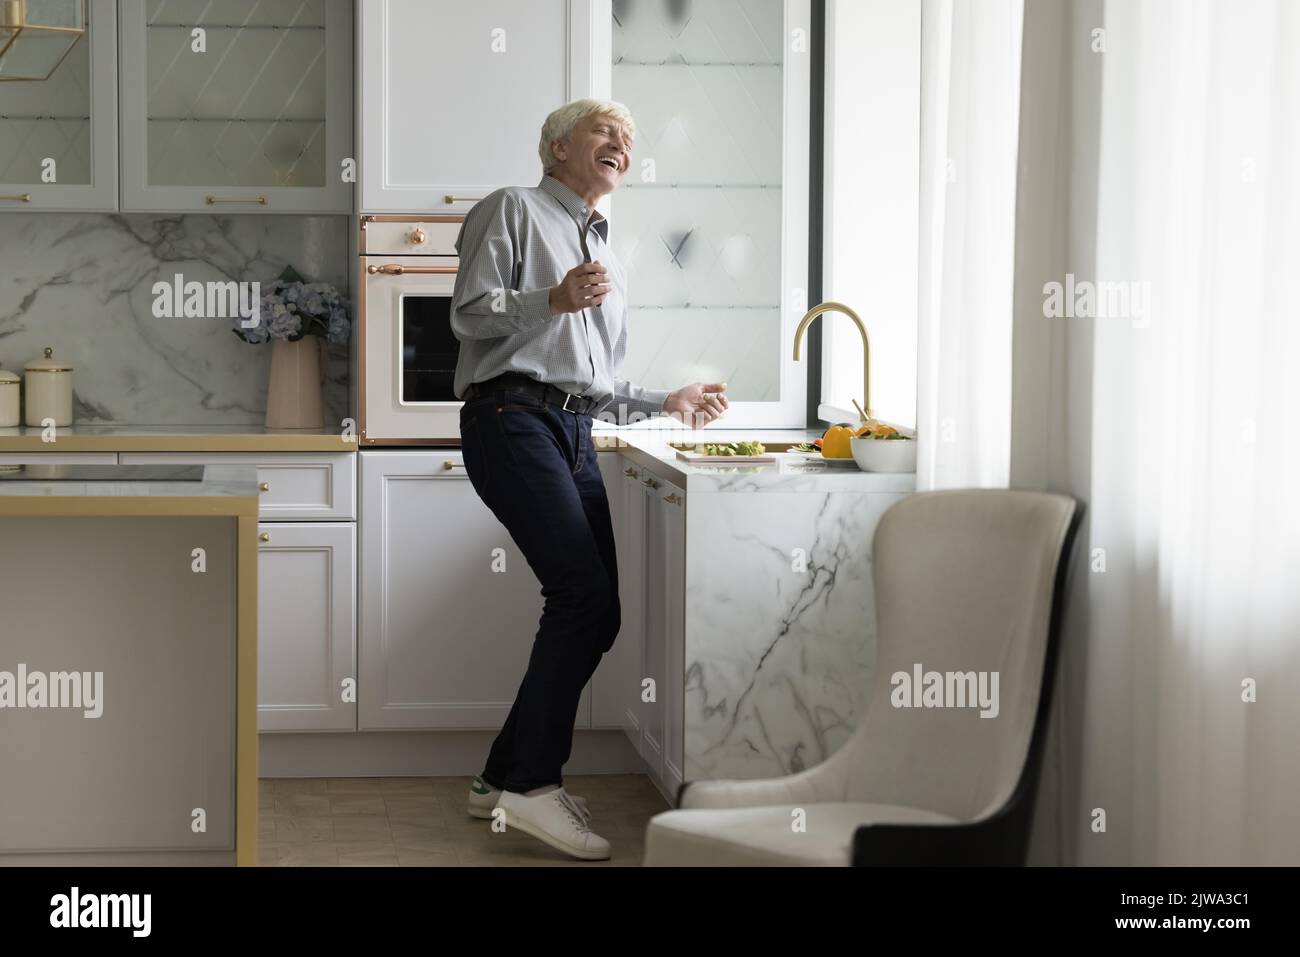 Cheerful energetic senior man having fun in modern kitchen interior Stock Photo